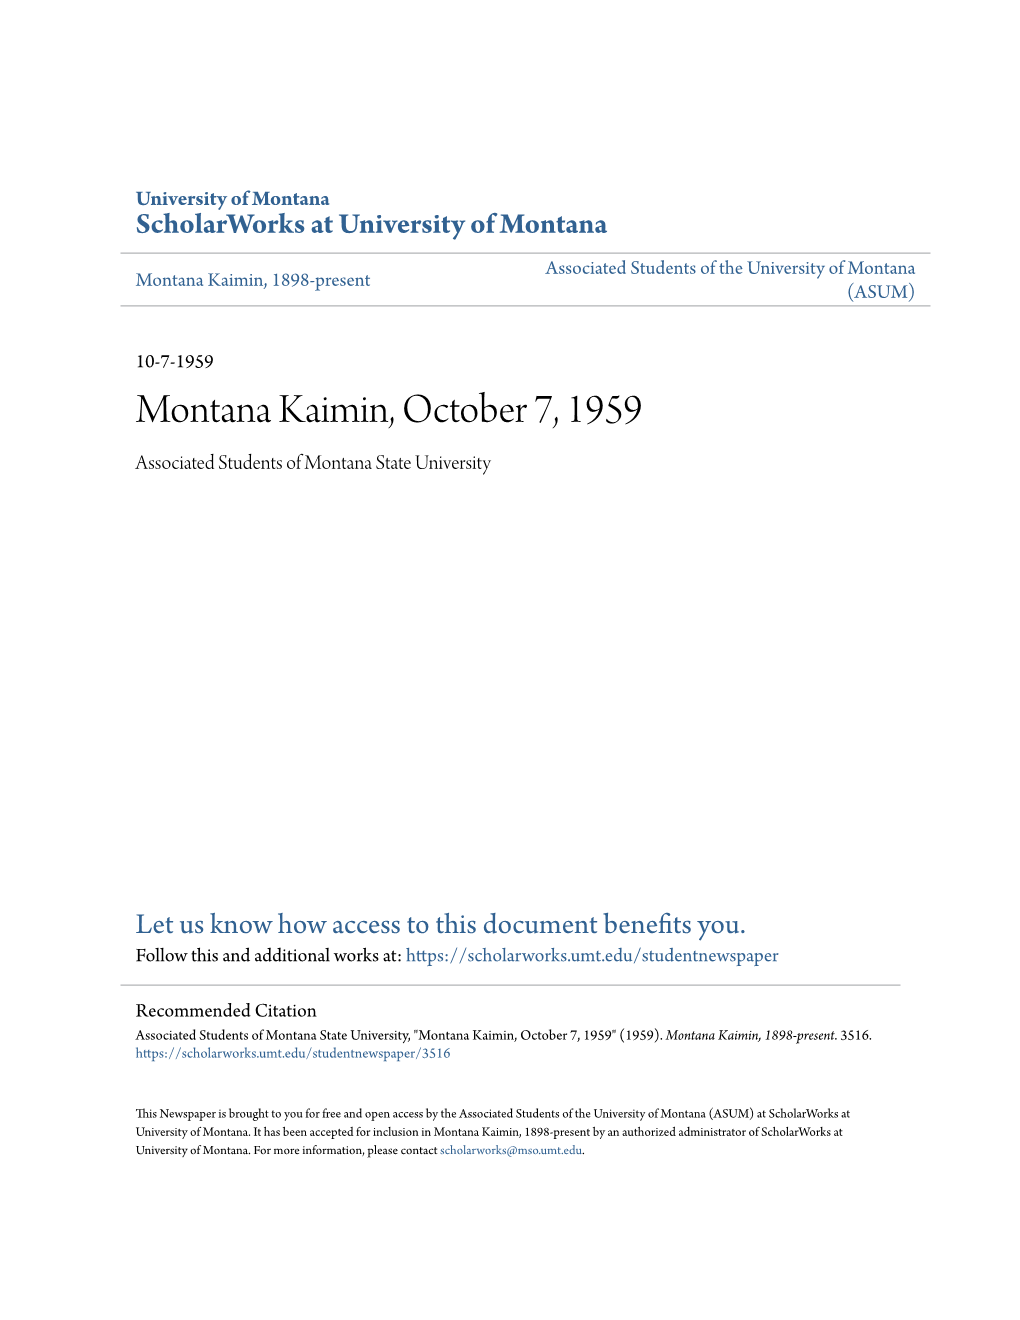 Montana Kaimin, October 7, 1959 Associated Students of Montana State University